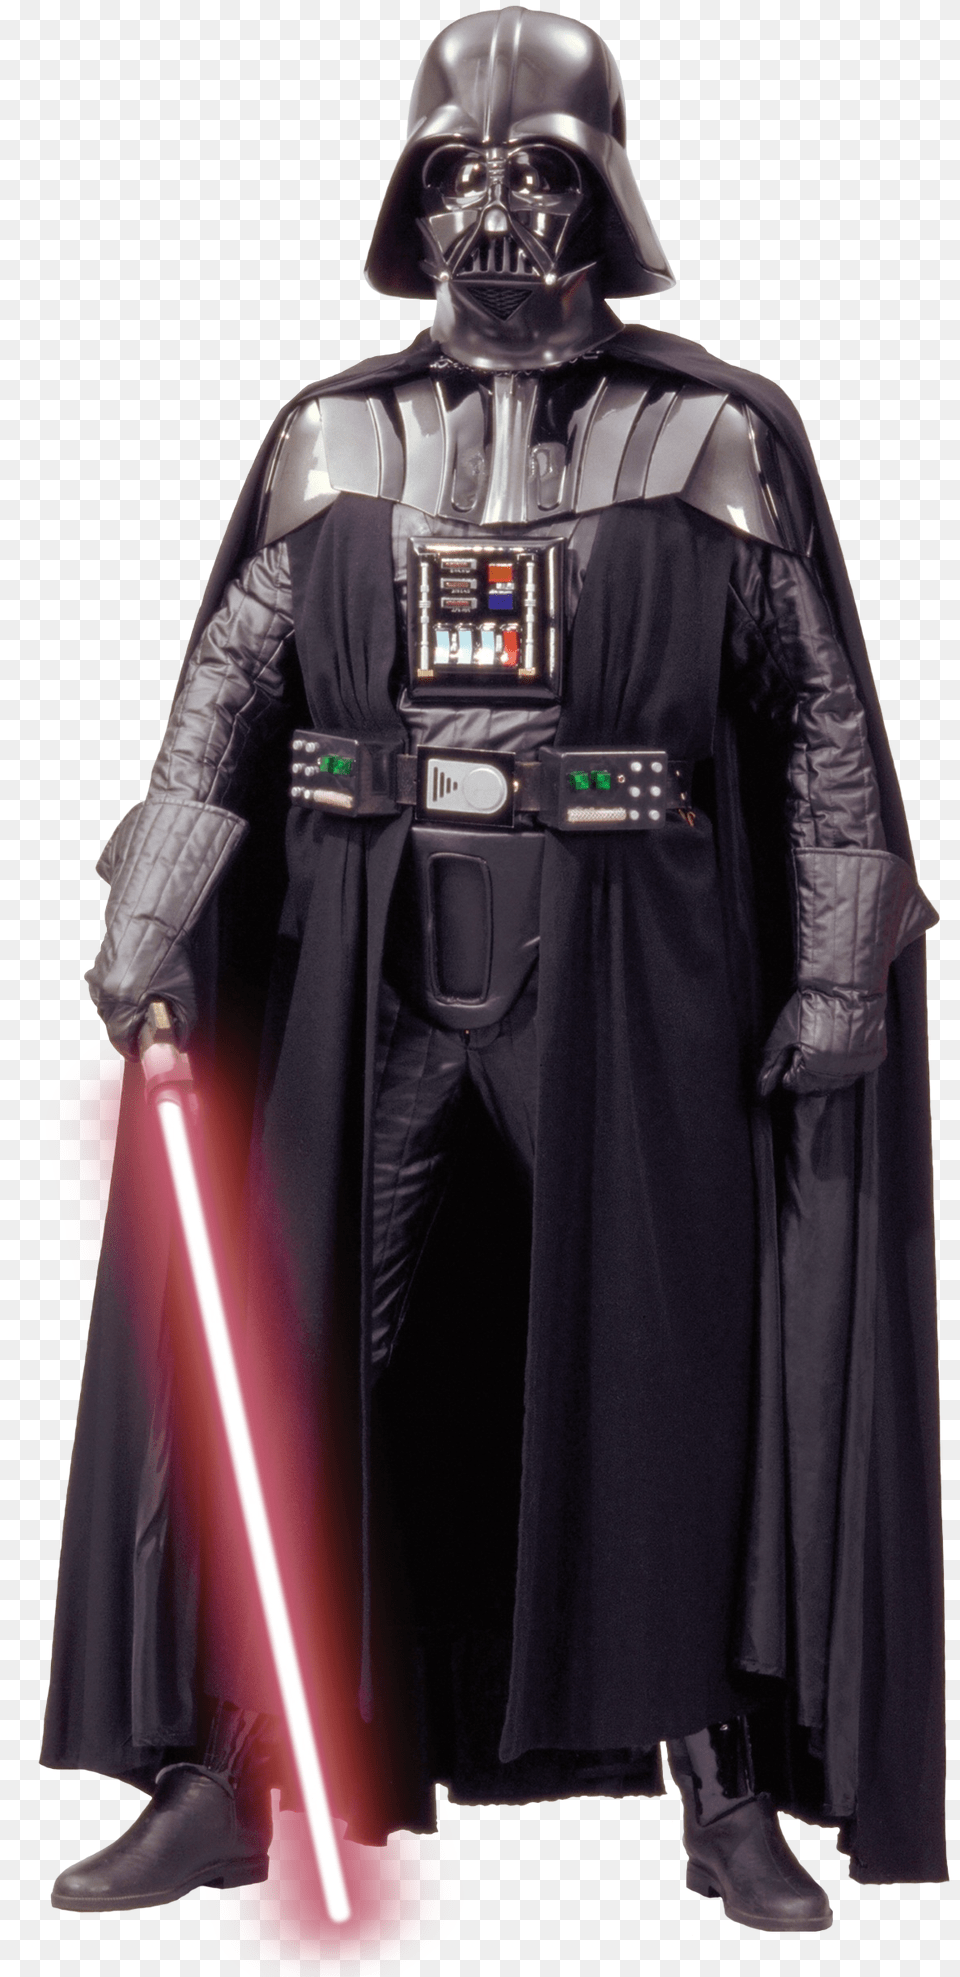 Darth Vader Also Known By His Birth Name Anakin Skywalker Dark Weider Star Wars, Adult, Fashion, Person, Male Png